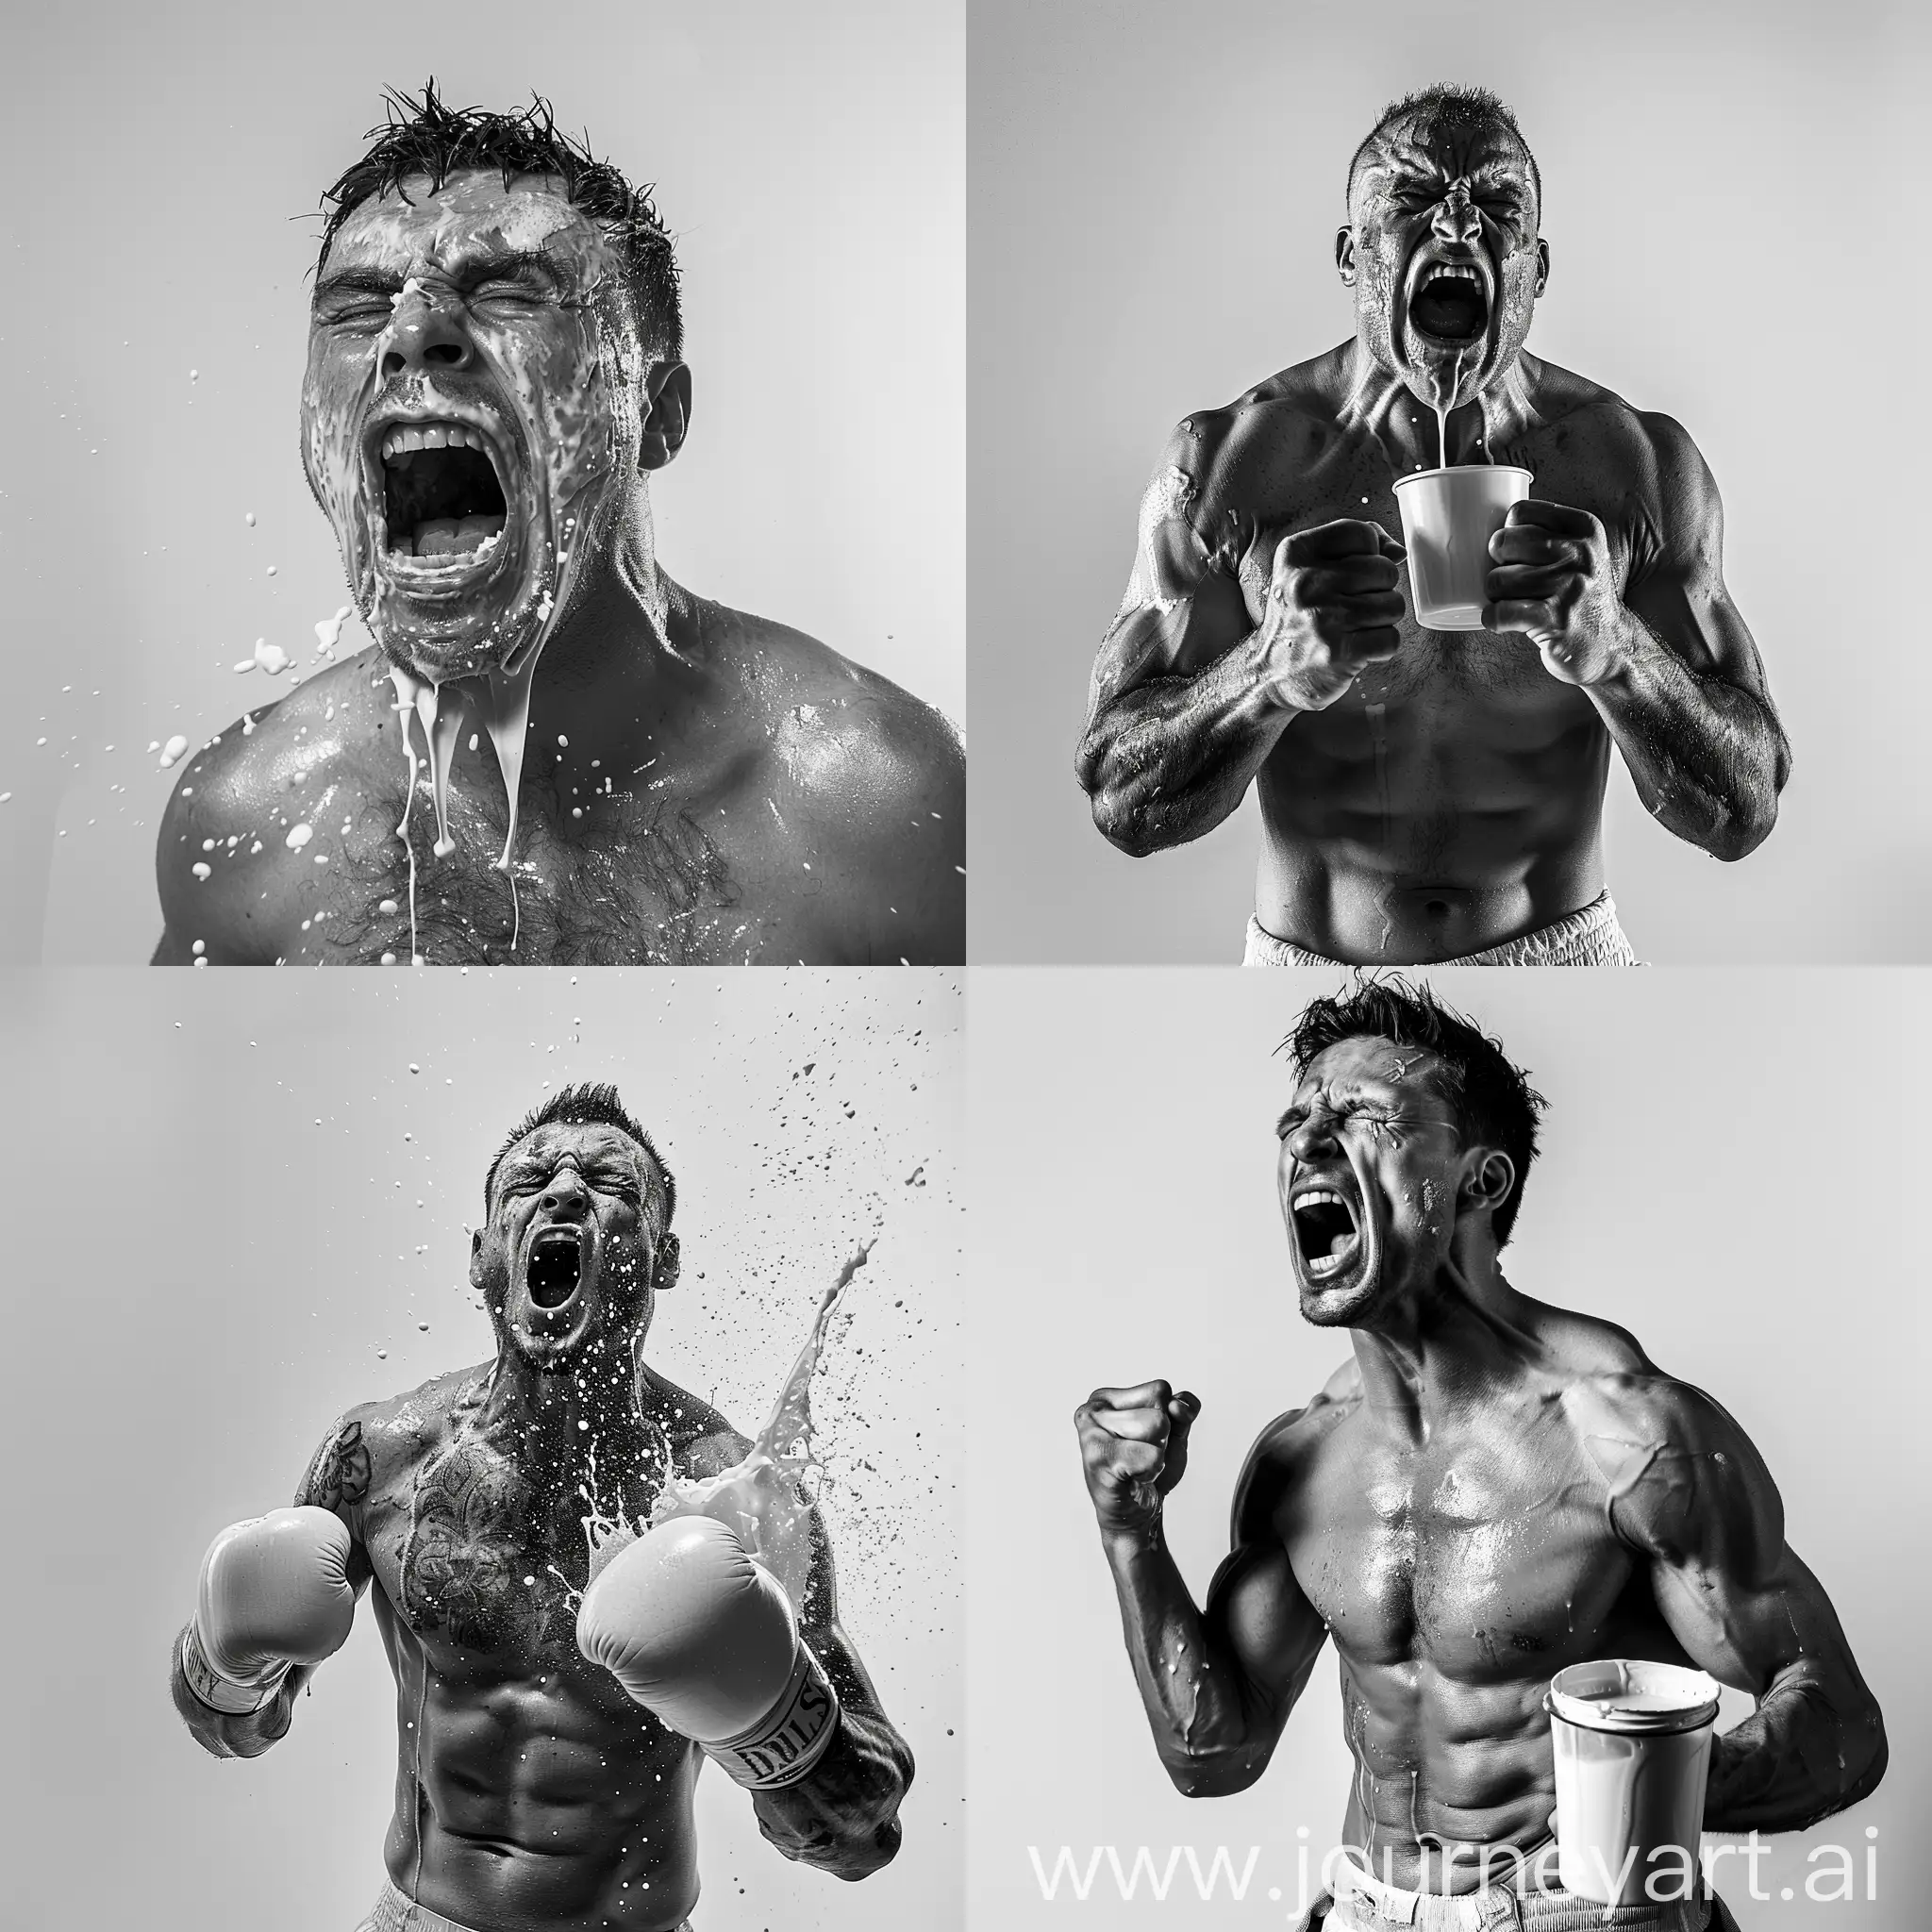 imagen 1:1 en blanco y negro, señor exboxeador gritando con mala leche, fondo blanco